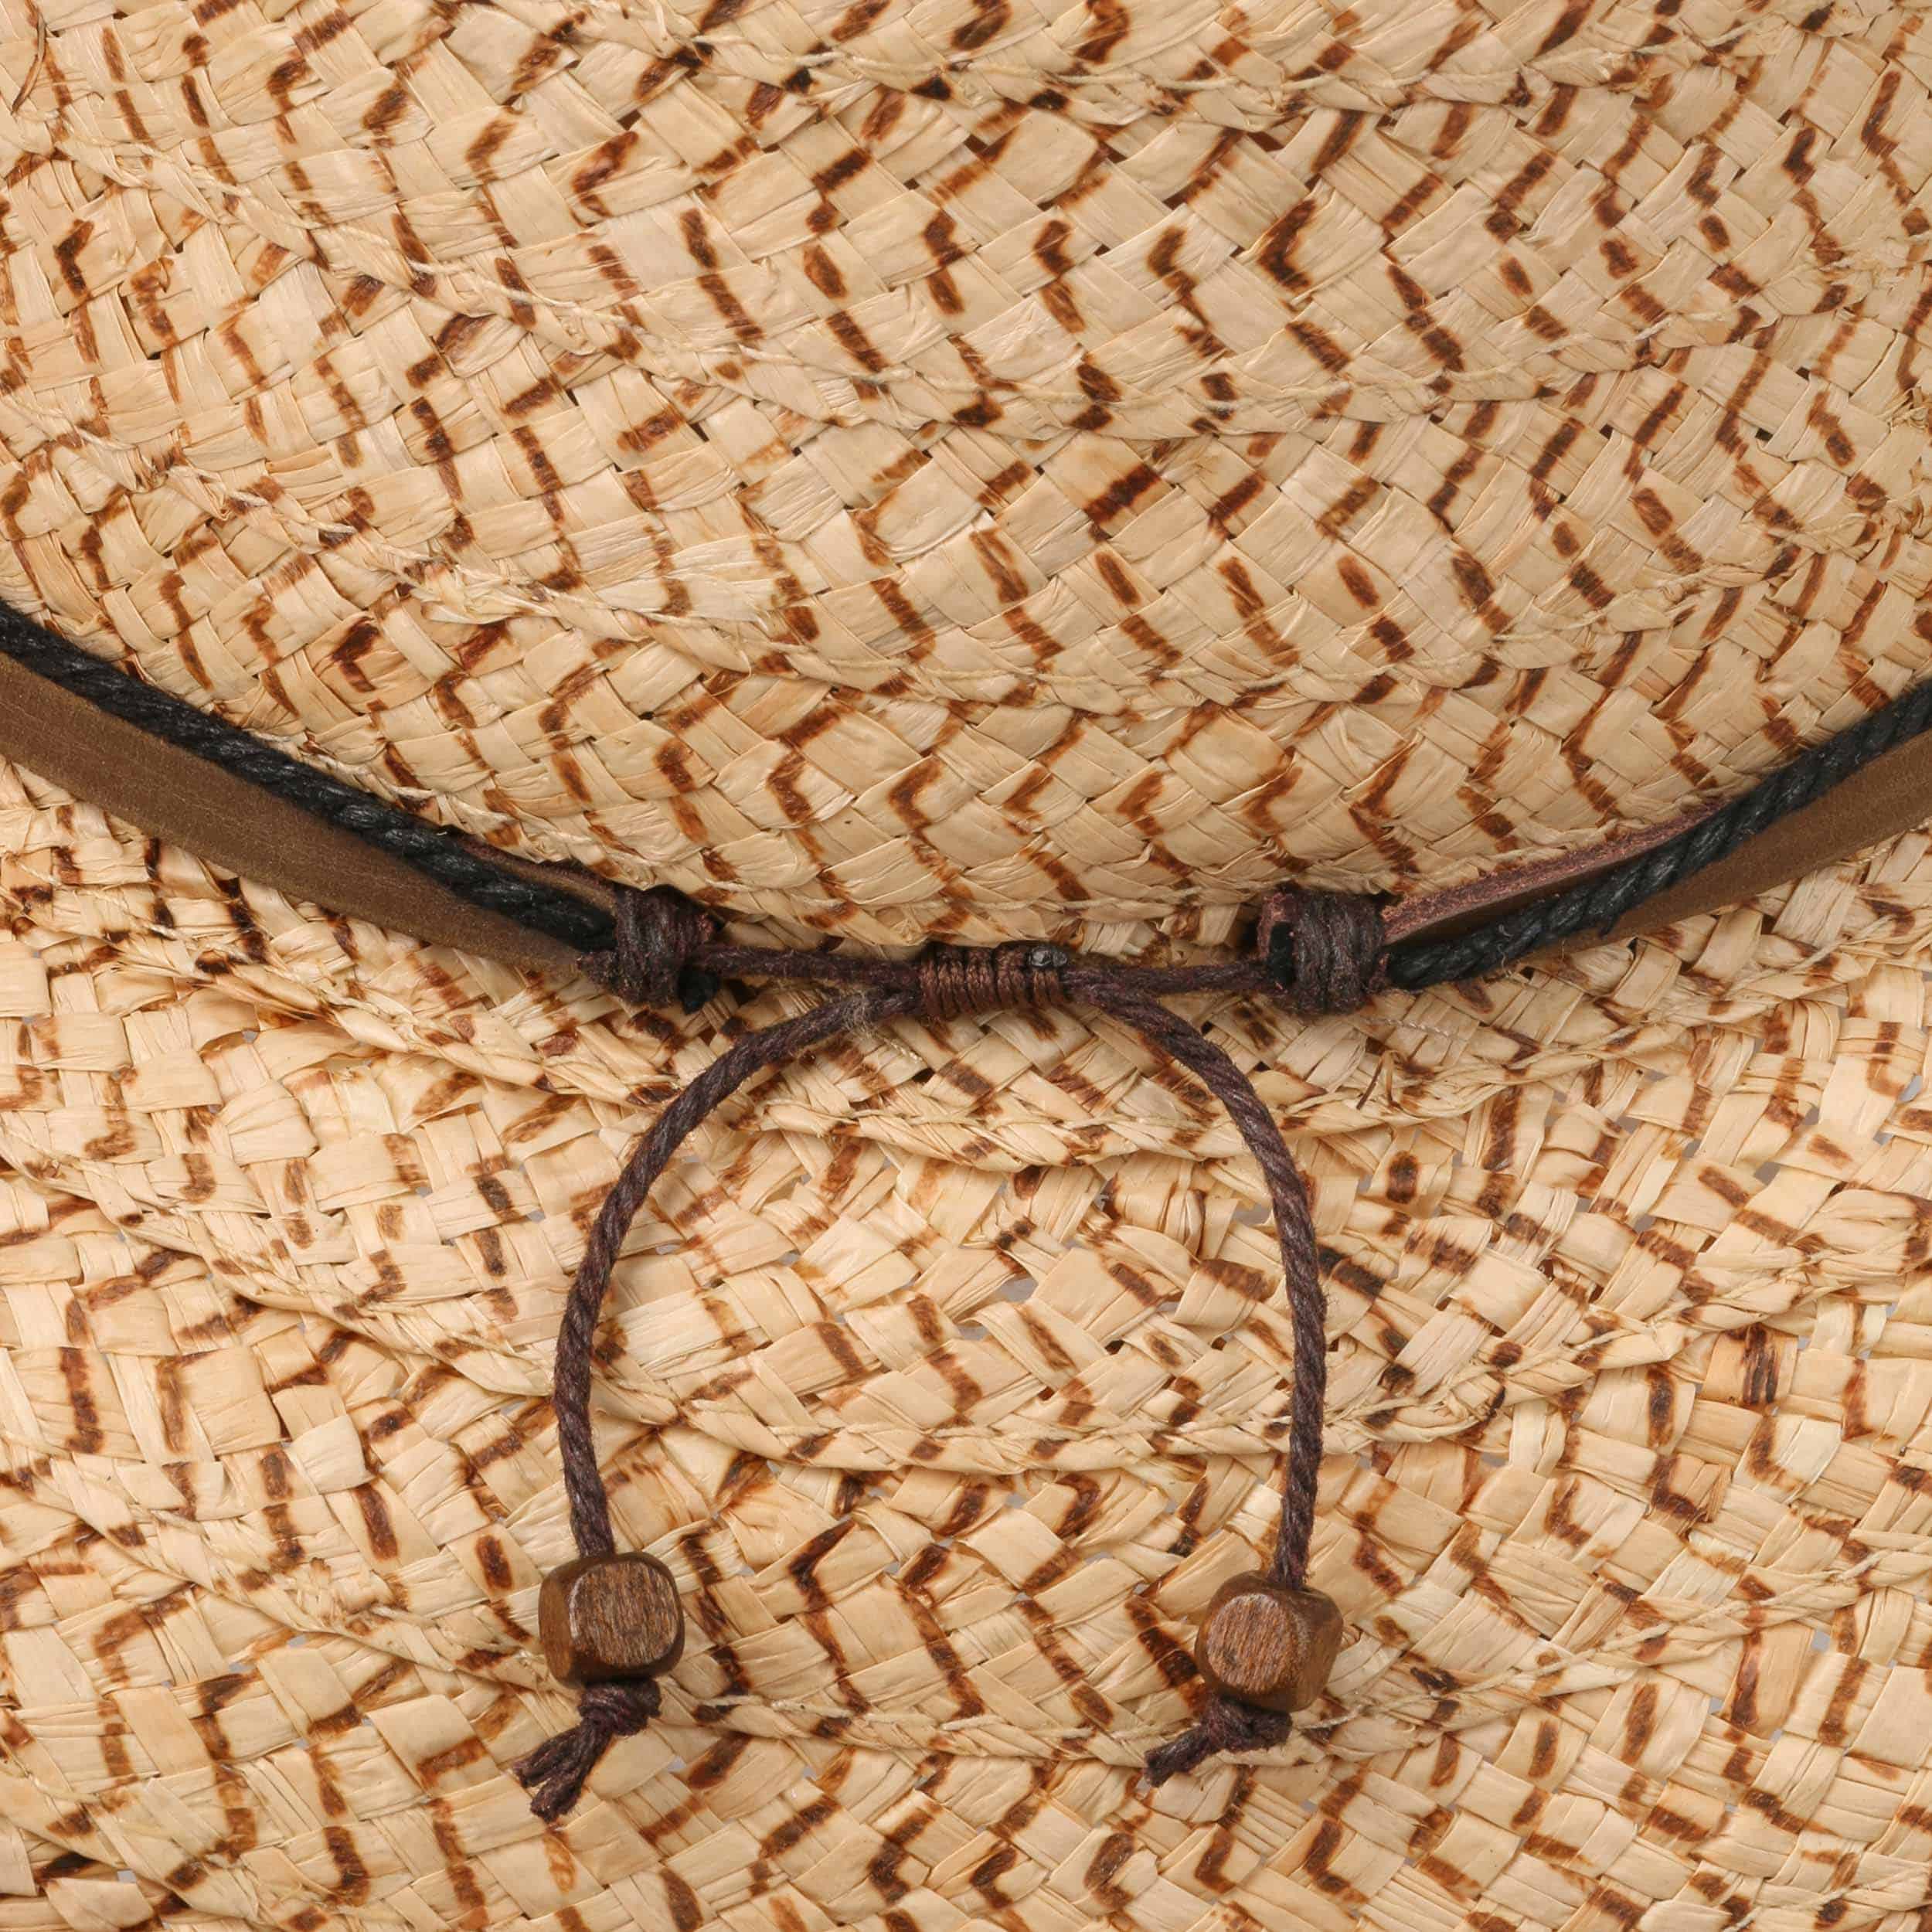 Glenrio Western Raffia Hat by Stetson - 59,00